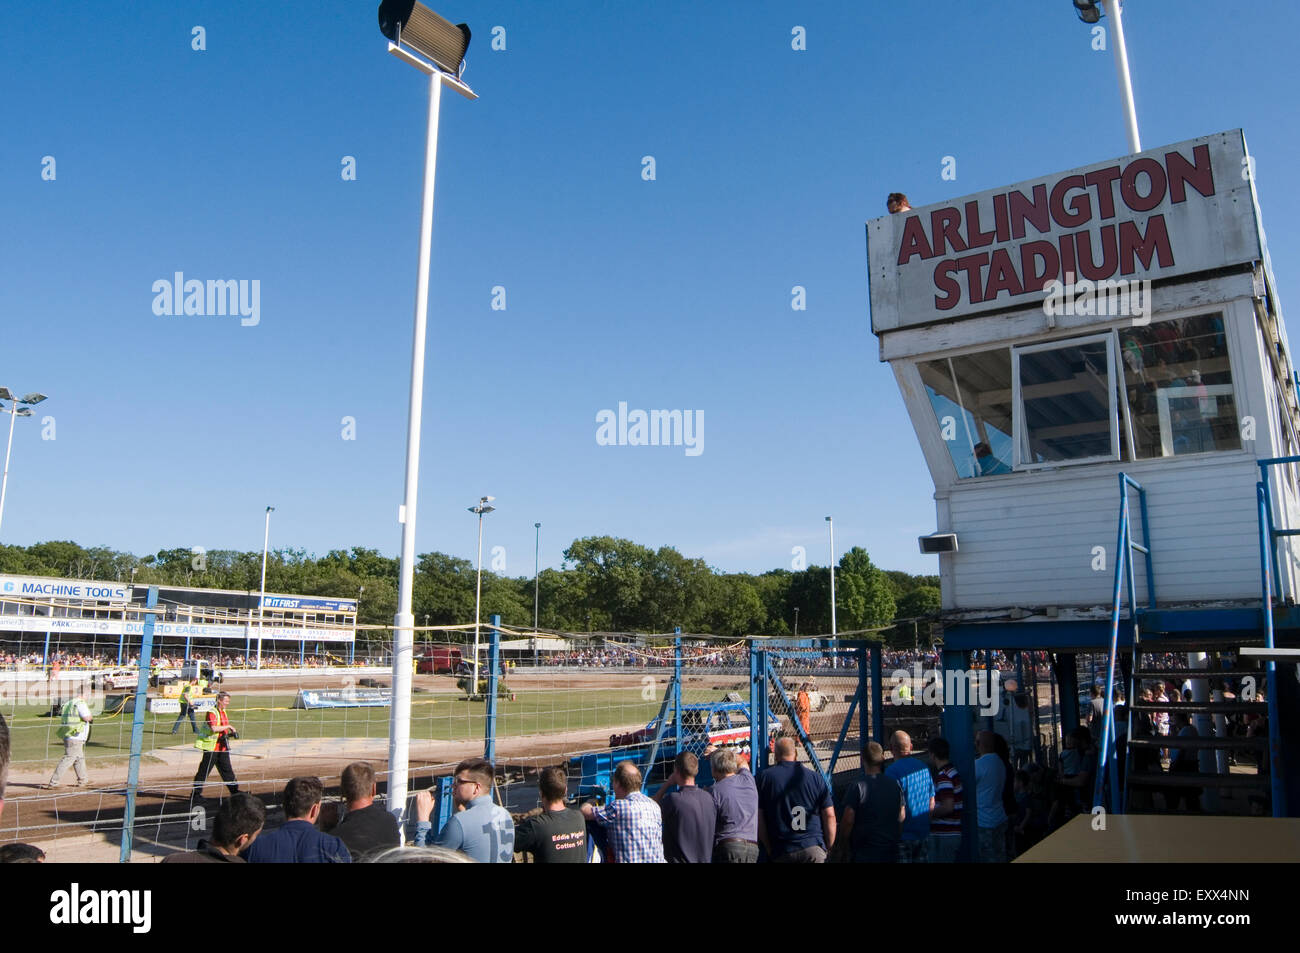 crowds of spectators at a banger race at Arlington speedway stadium near eastborne uk spectator motor sport demolition derby der Stock Photo